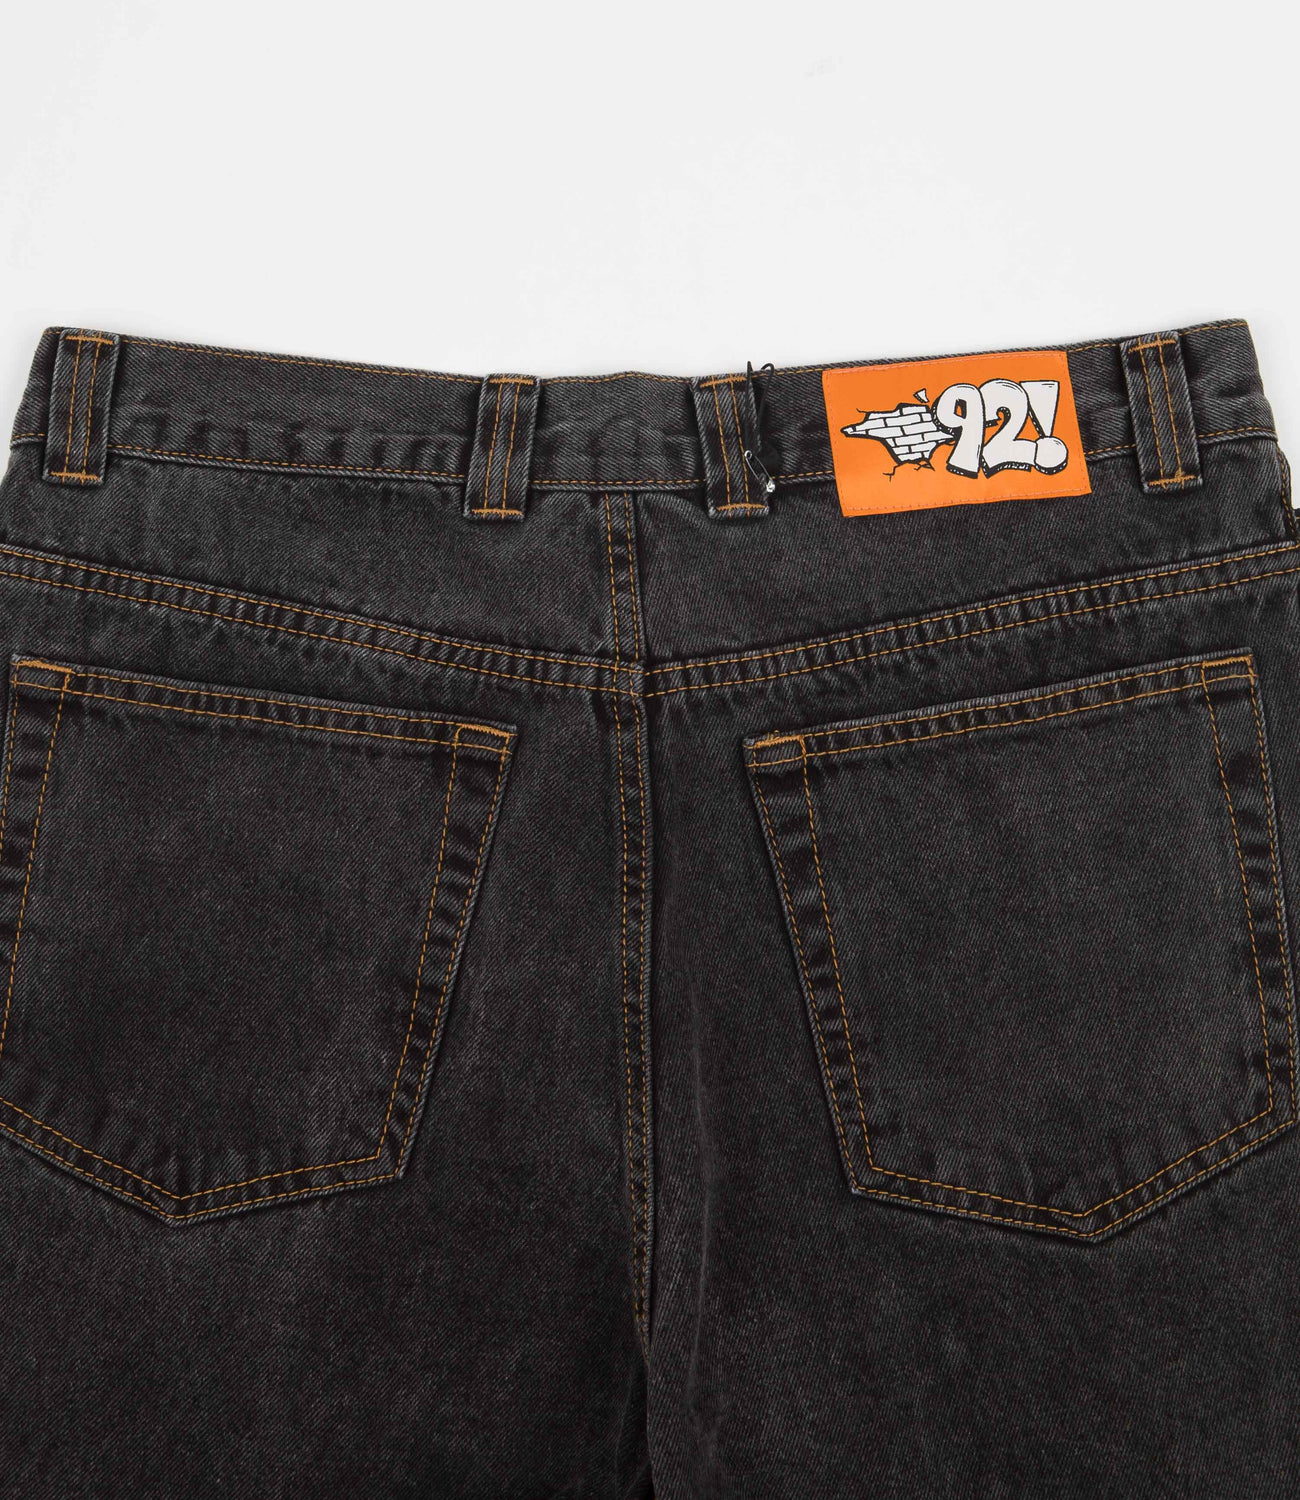 Polar '92 Denim Jeans - Washed Black | Flatspot 